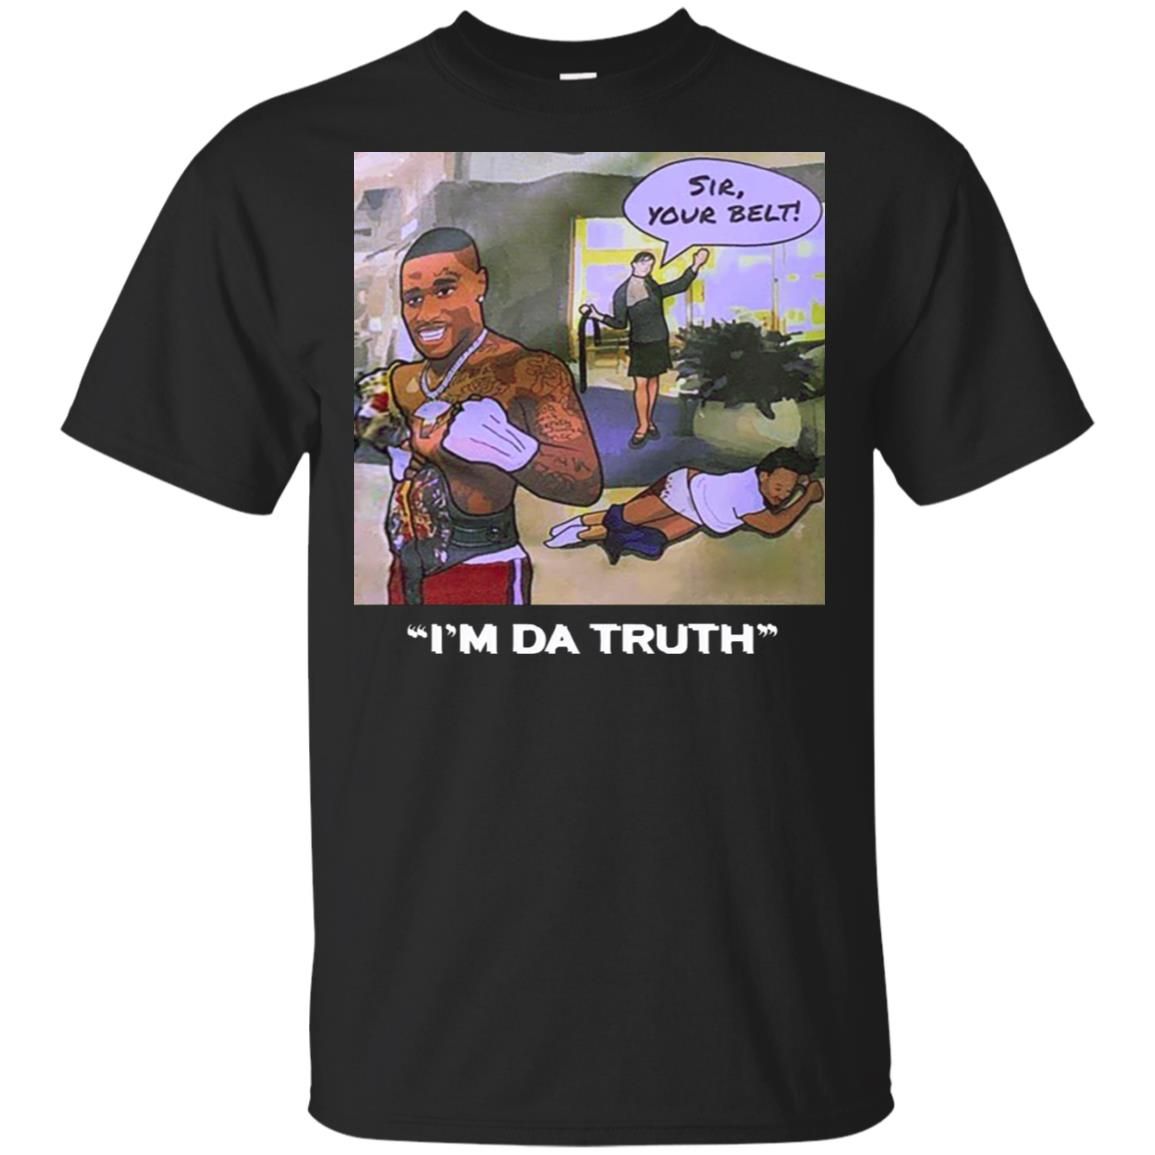 Dababy Sir your belt I’m da truth shirt Style: Gildan Ultra Cotton T-Shirt, Color: Black